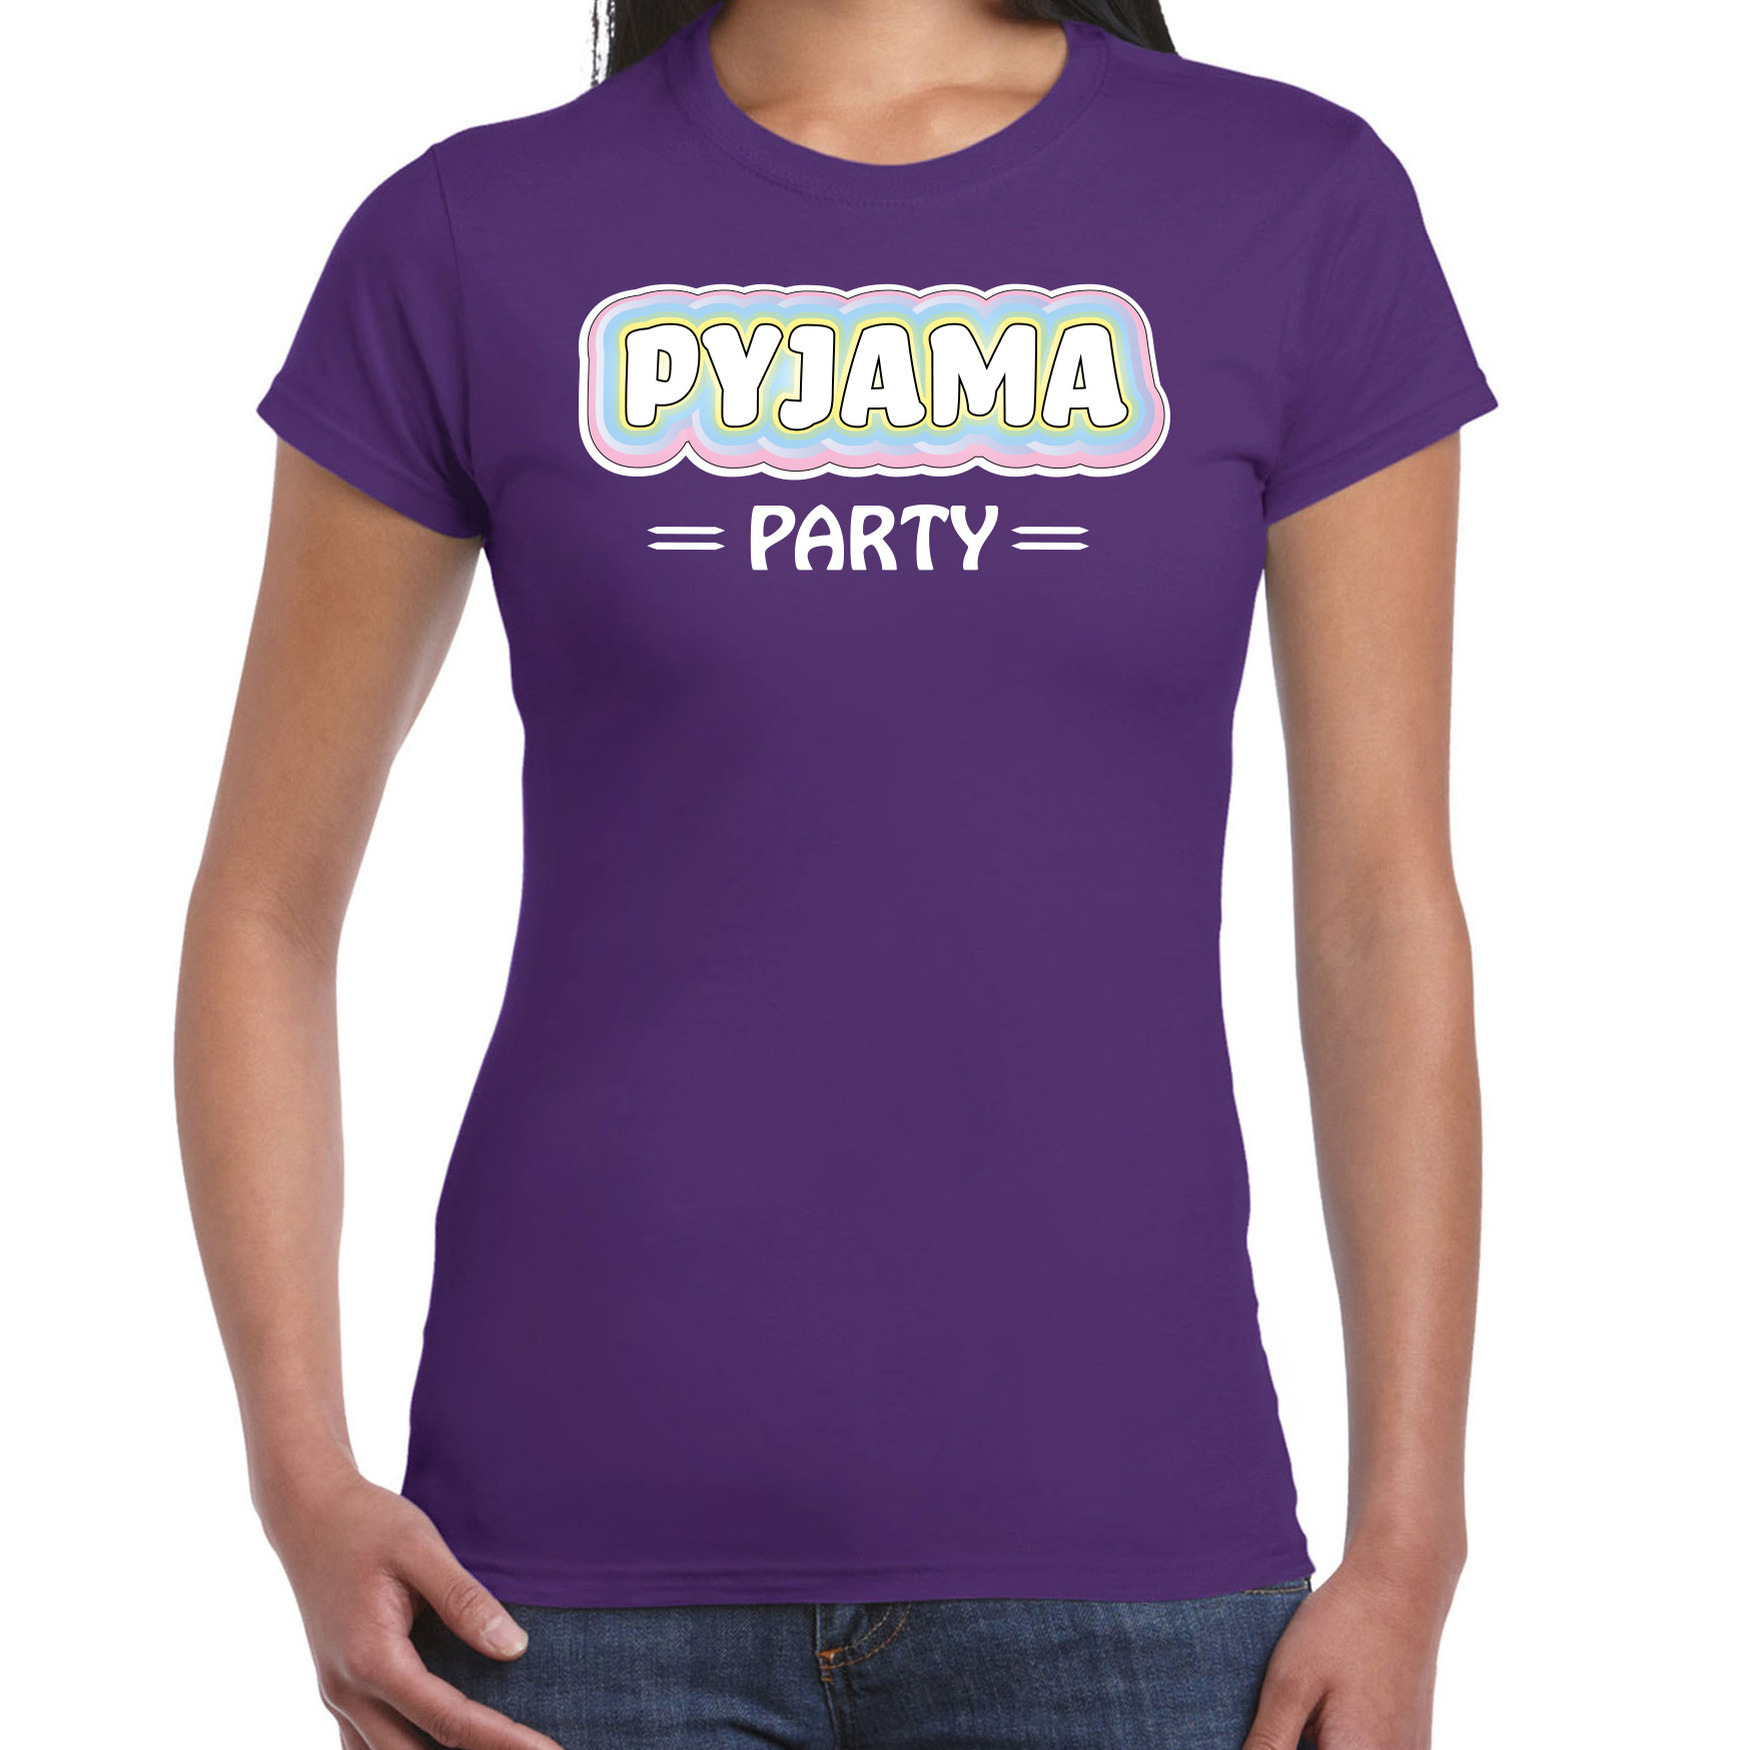 Verkleed T-shirt voor dames pyjama party paars carnaval foute party